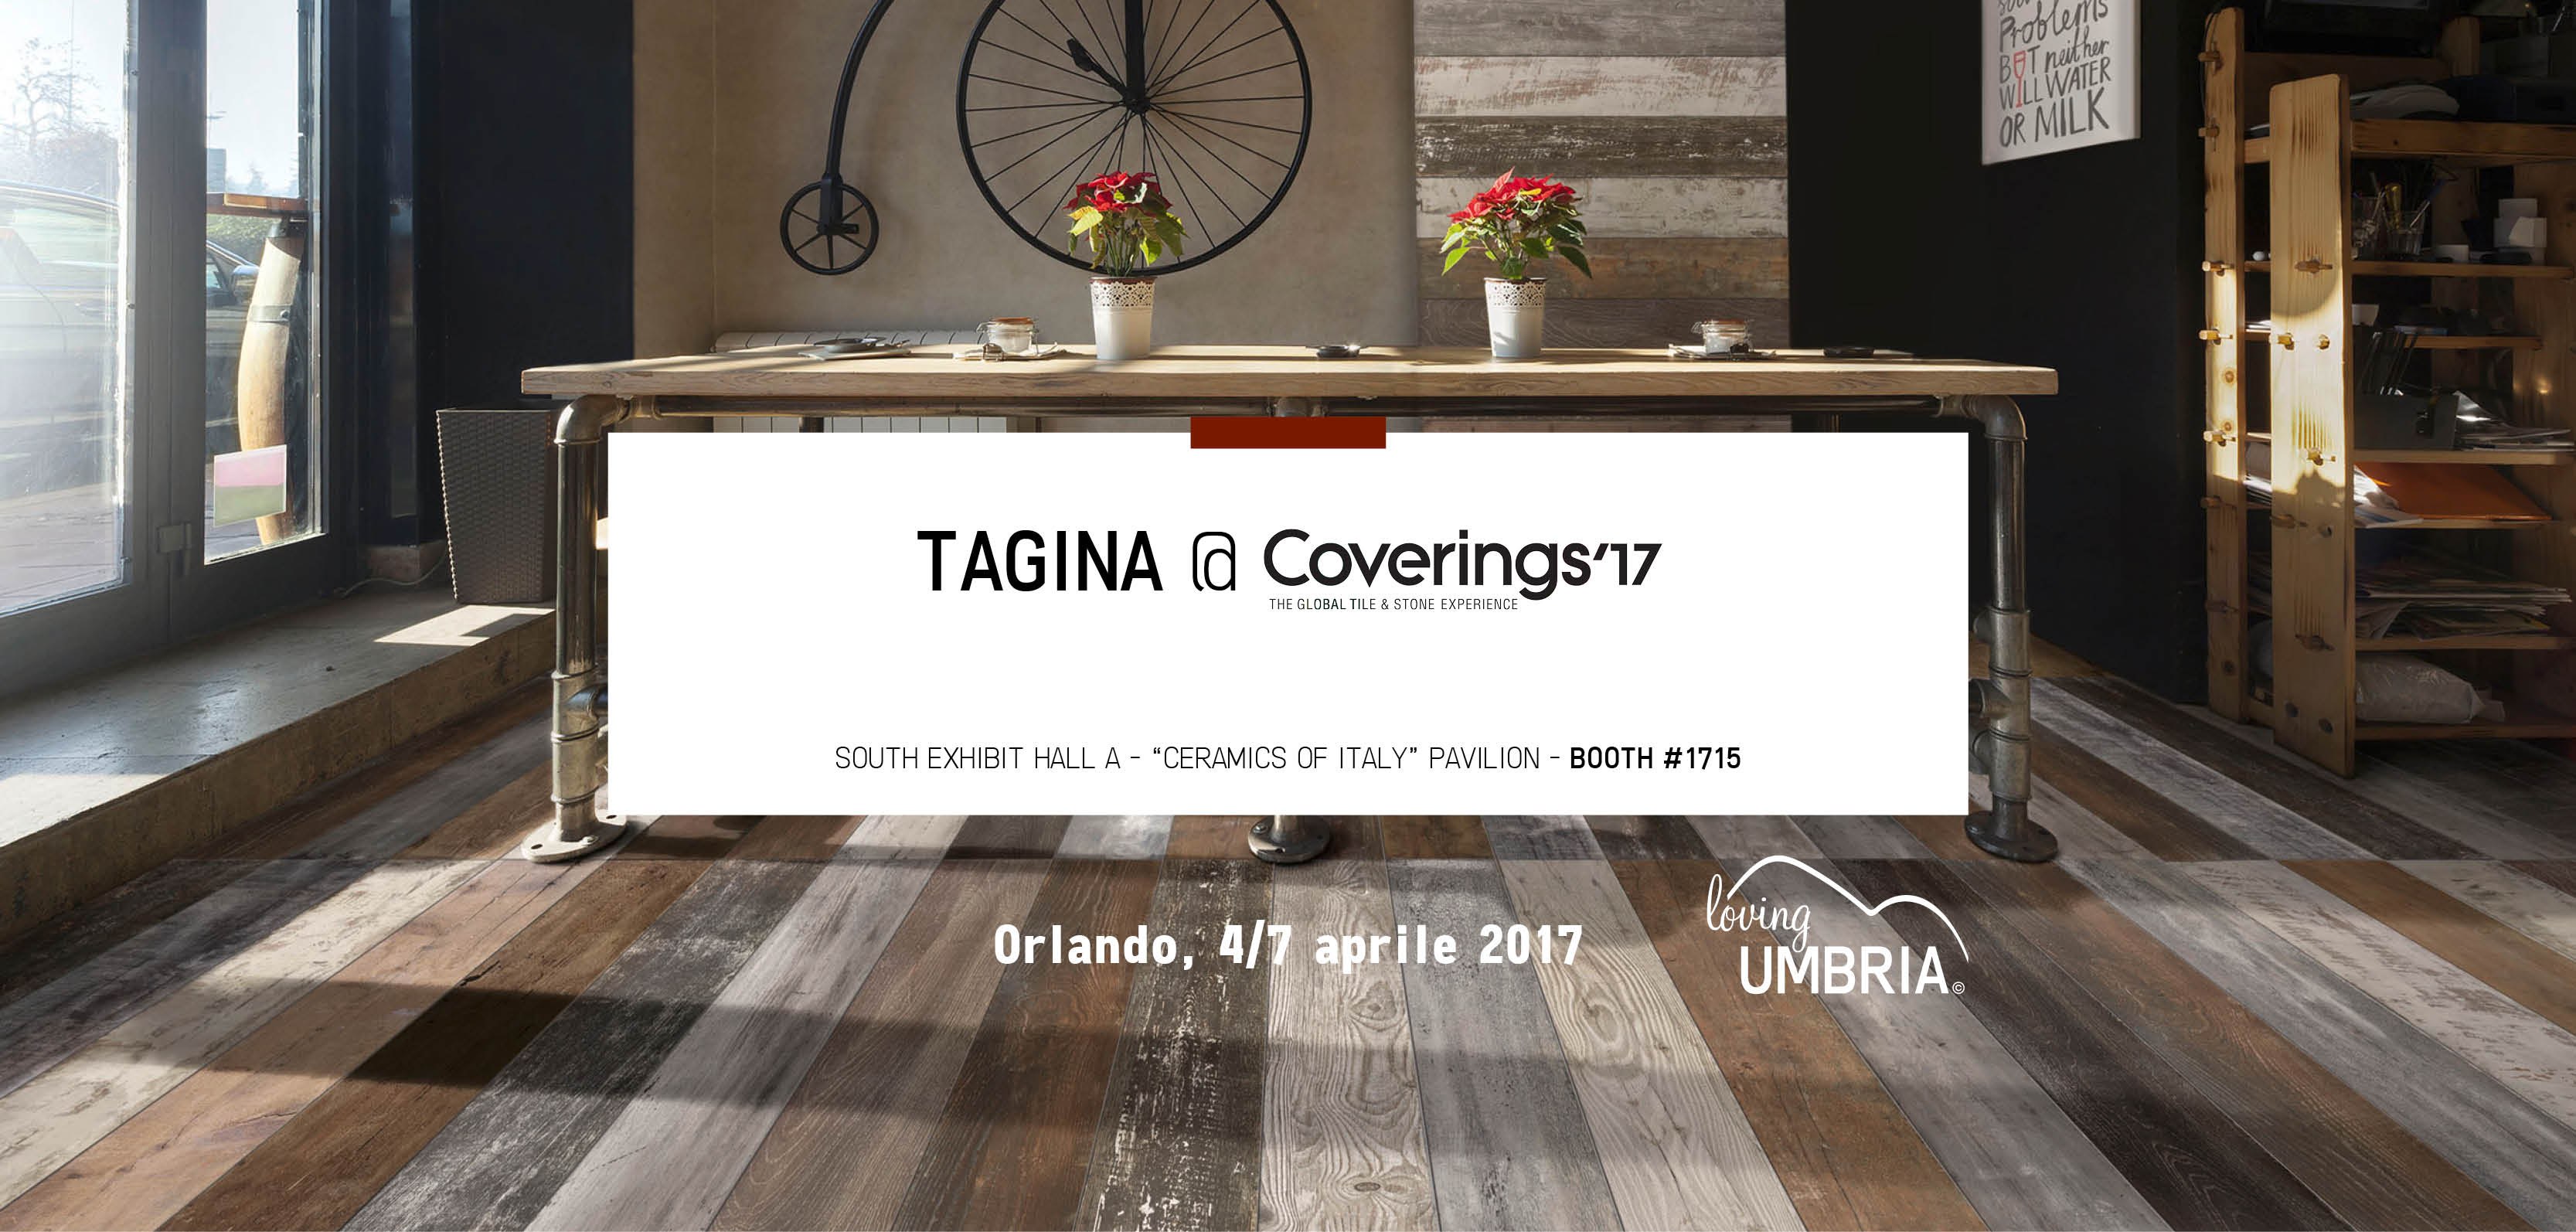 tagina-coverigns2017-1